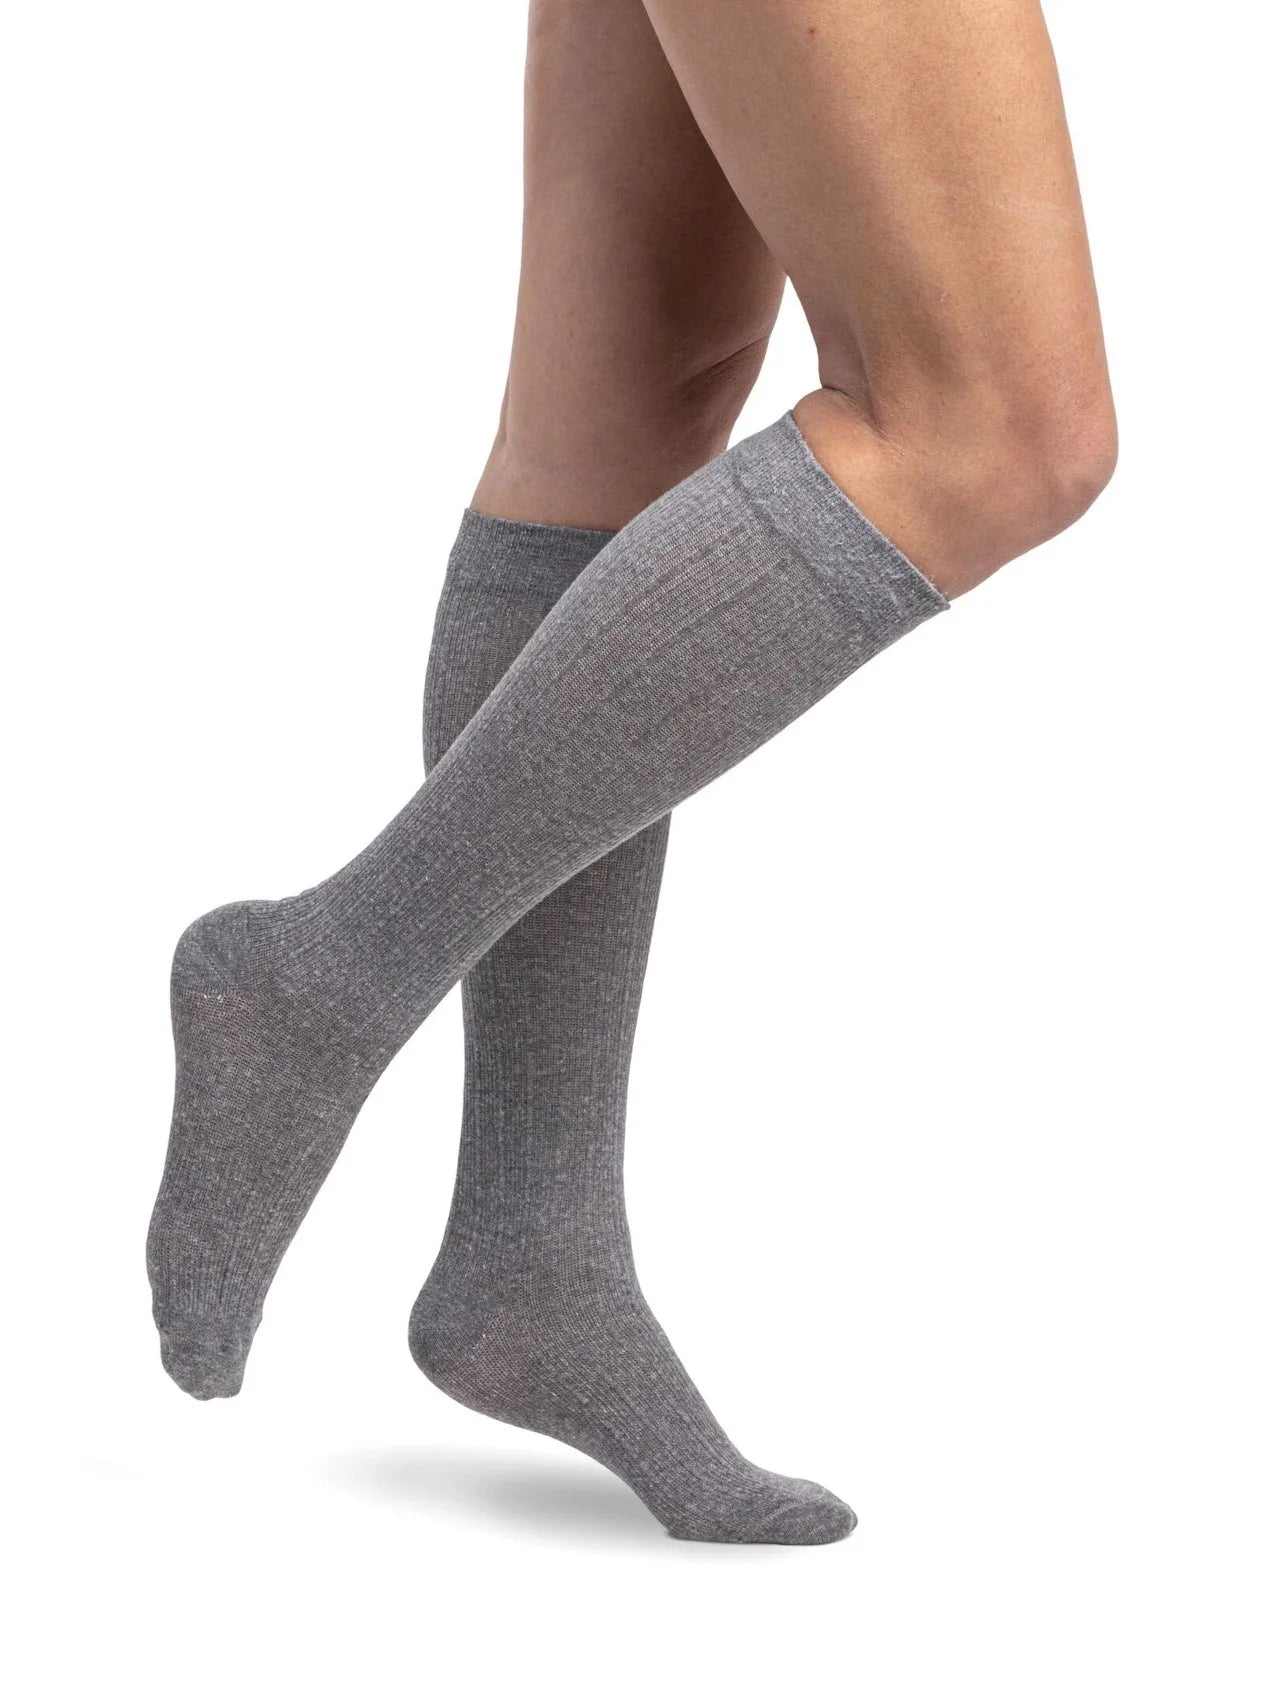 Sigvaris 250 Linen Compression Socks 20-30 mmHg Calf High For Women Closed Toe